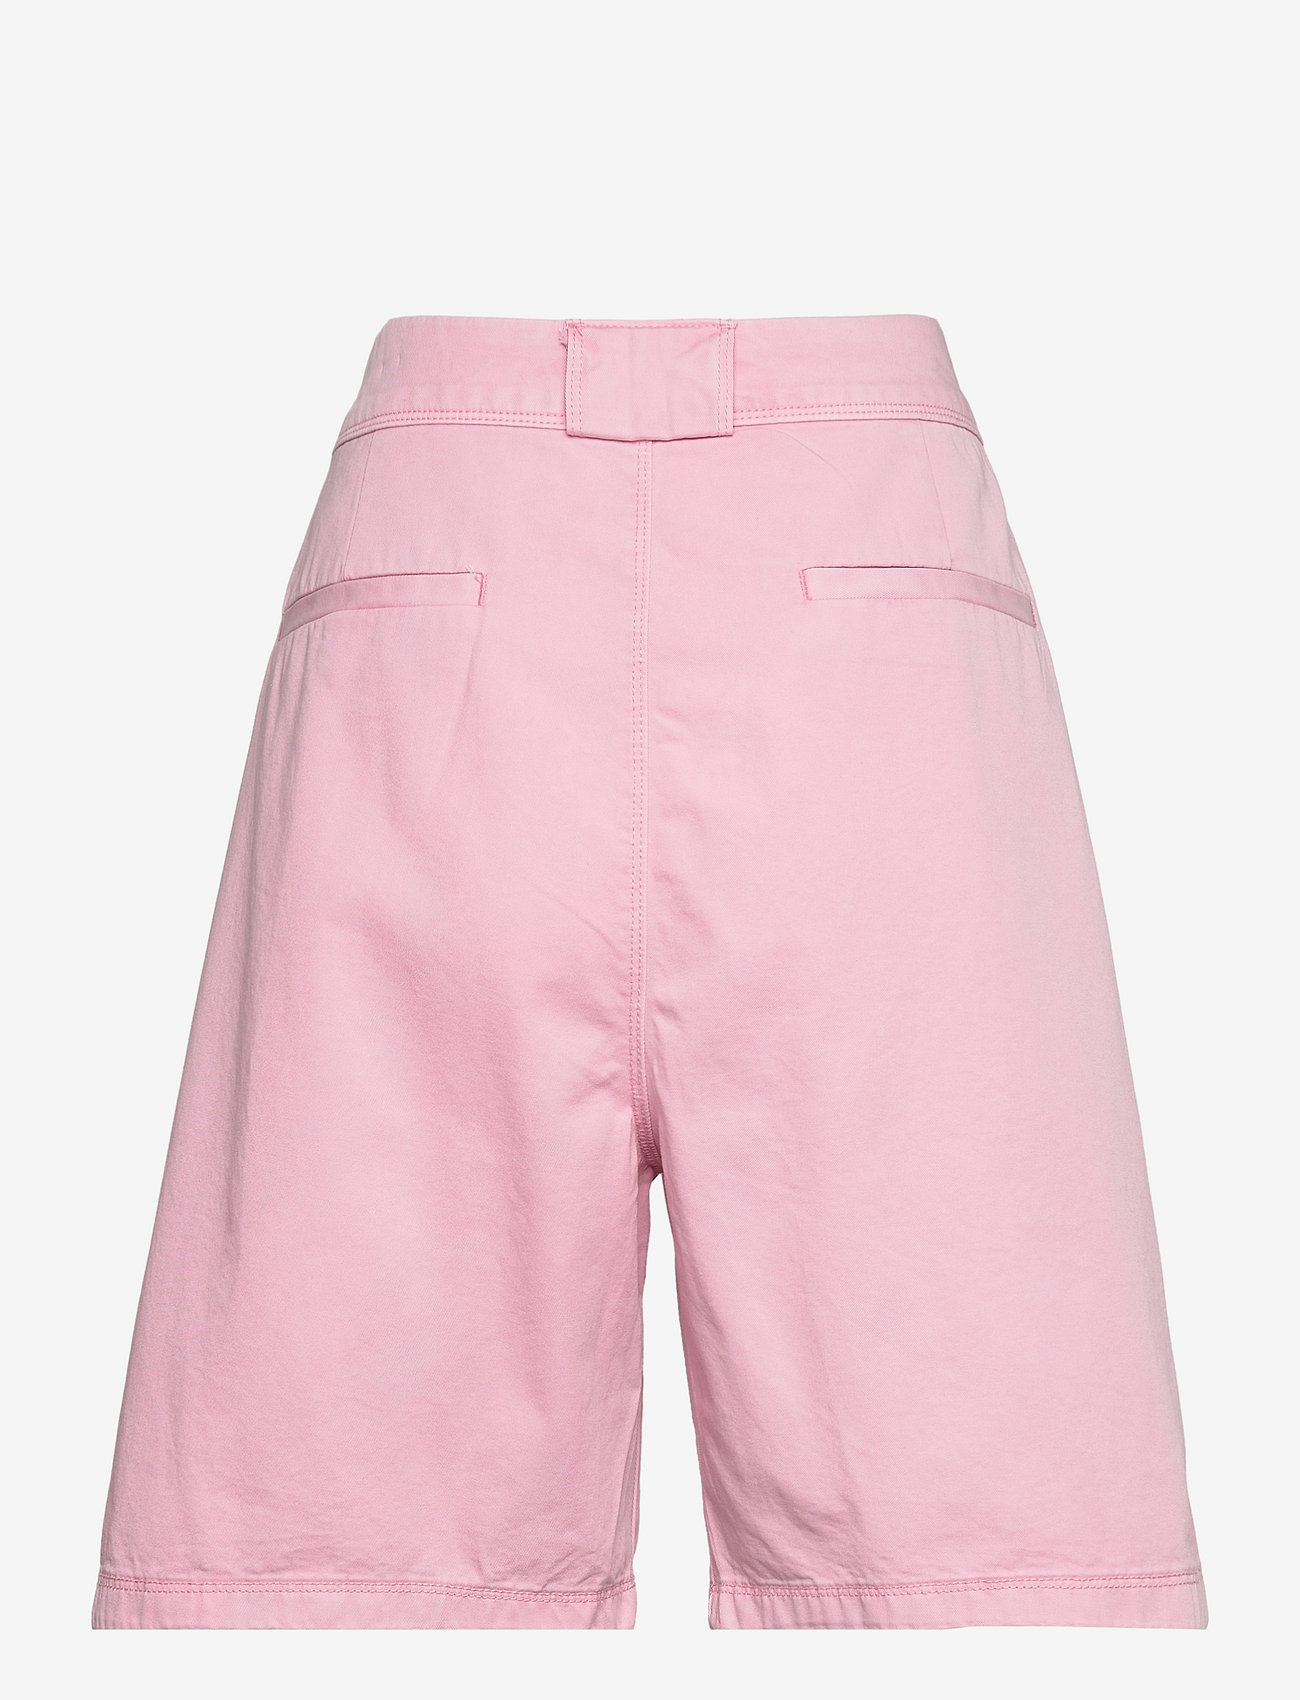 Esprit Casual - Shorts woven - chino-shorts - pink - 1